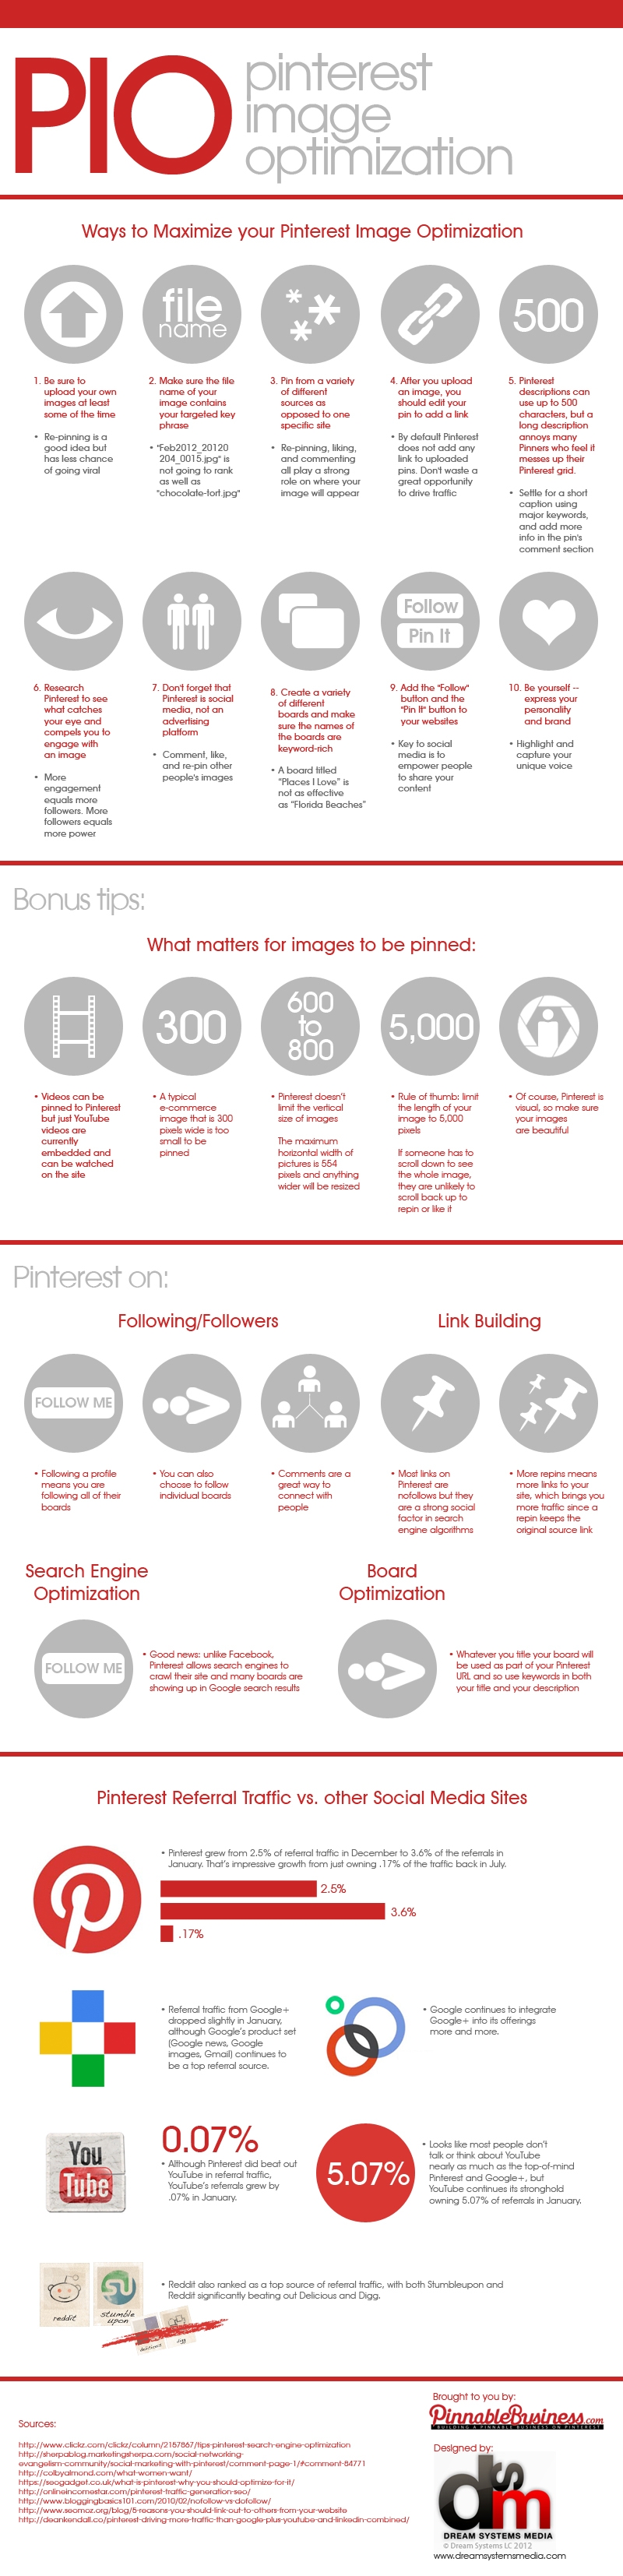 Pinterest Infographic- Pinterest image SEO